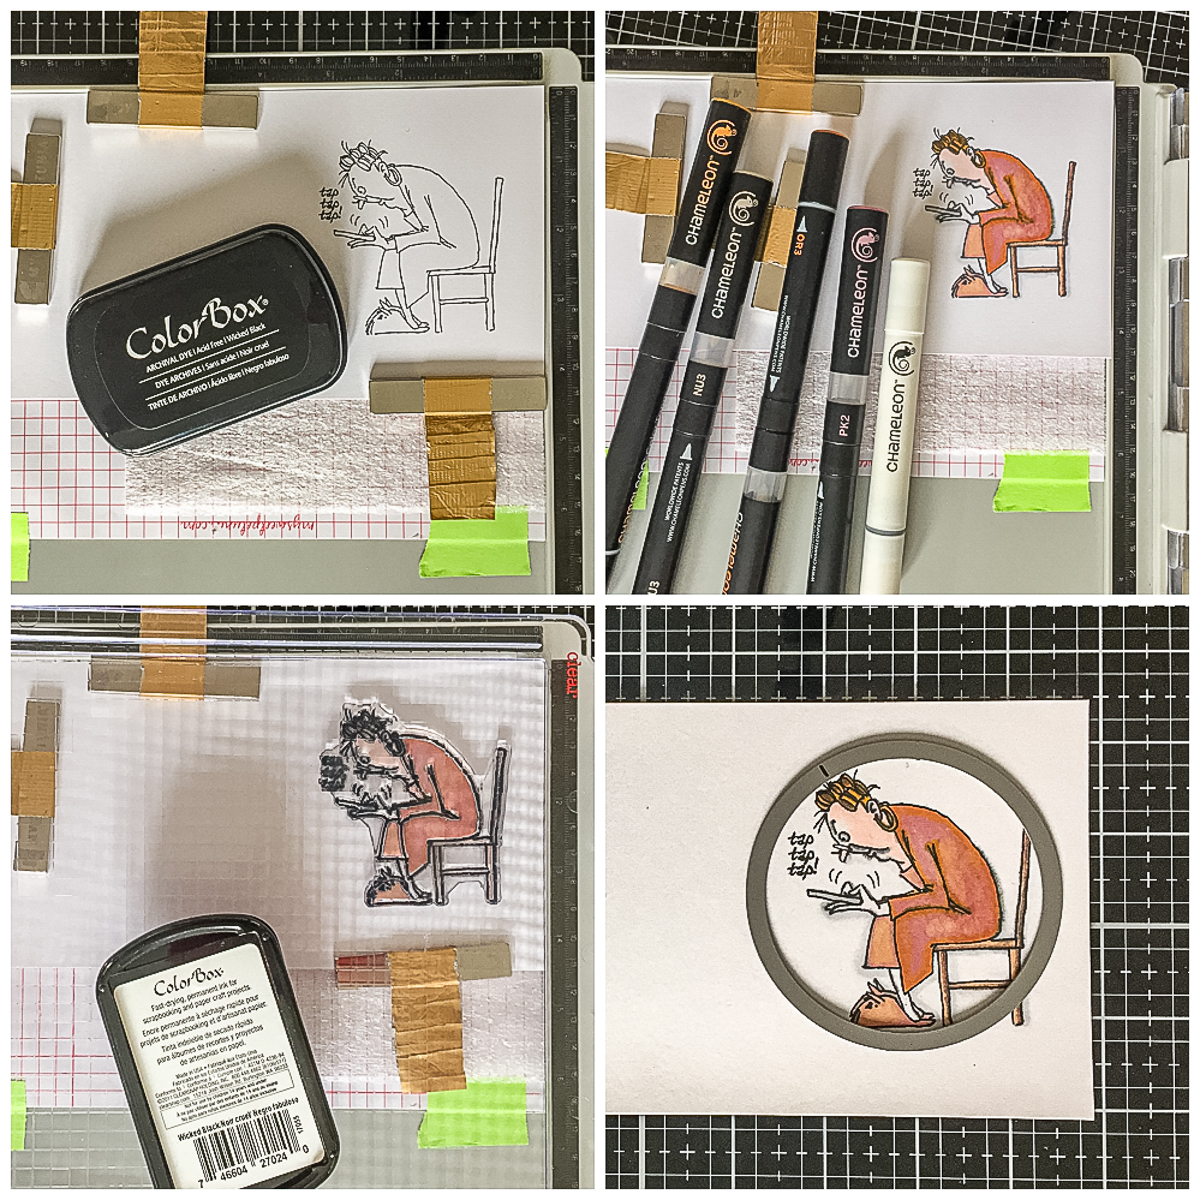 Art Impressions card techniques using inkstand Chameleon pens